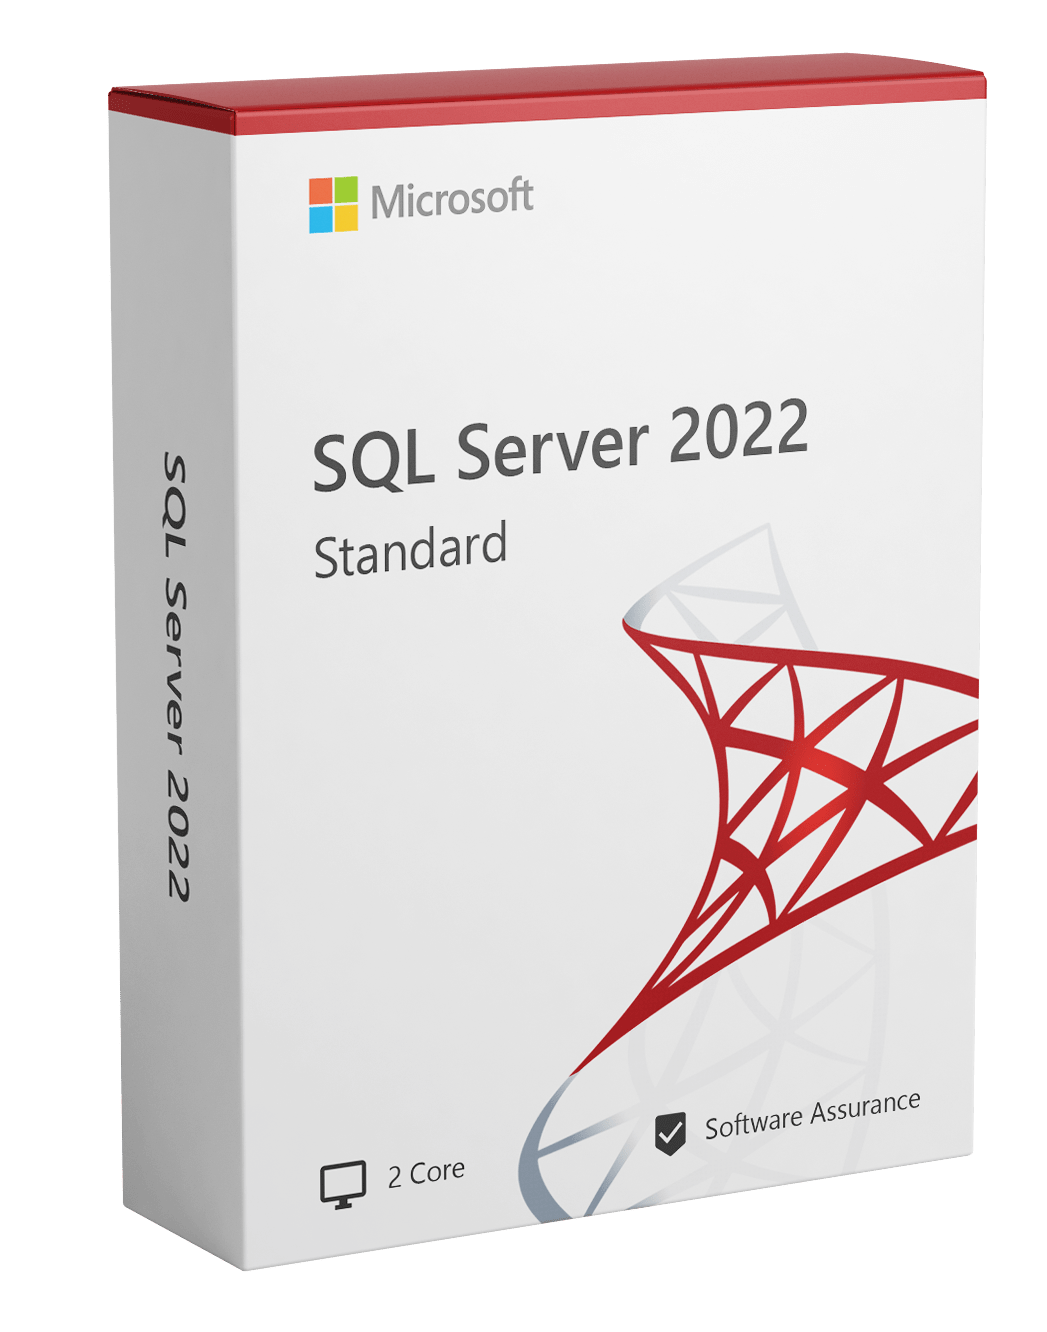 Microsoft Software Microsoft SQL Server 2022 Standard - 2 Core (w/ Software Assurance) box